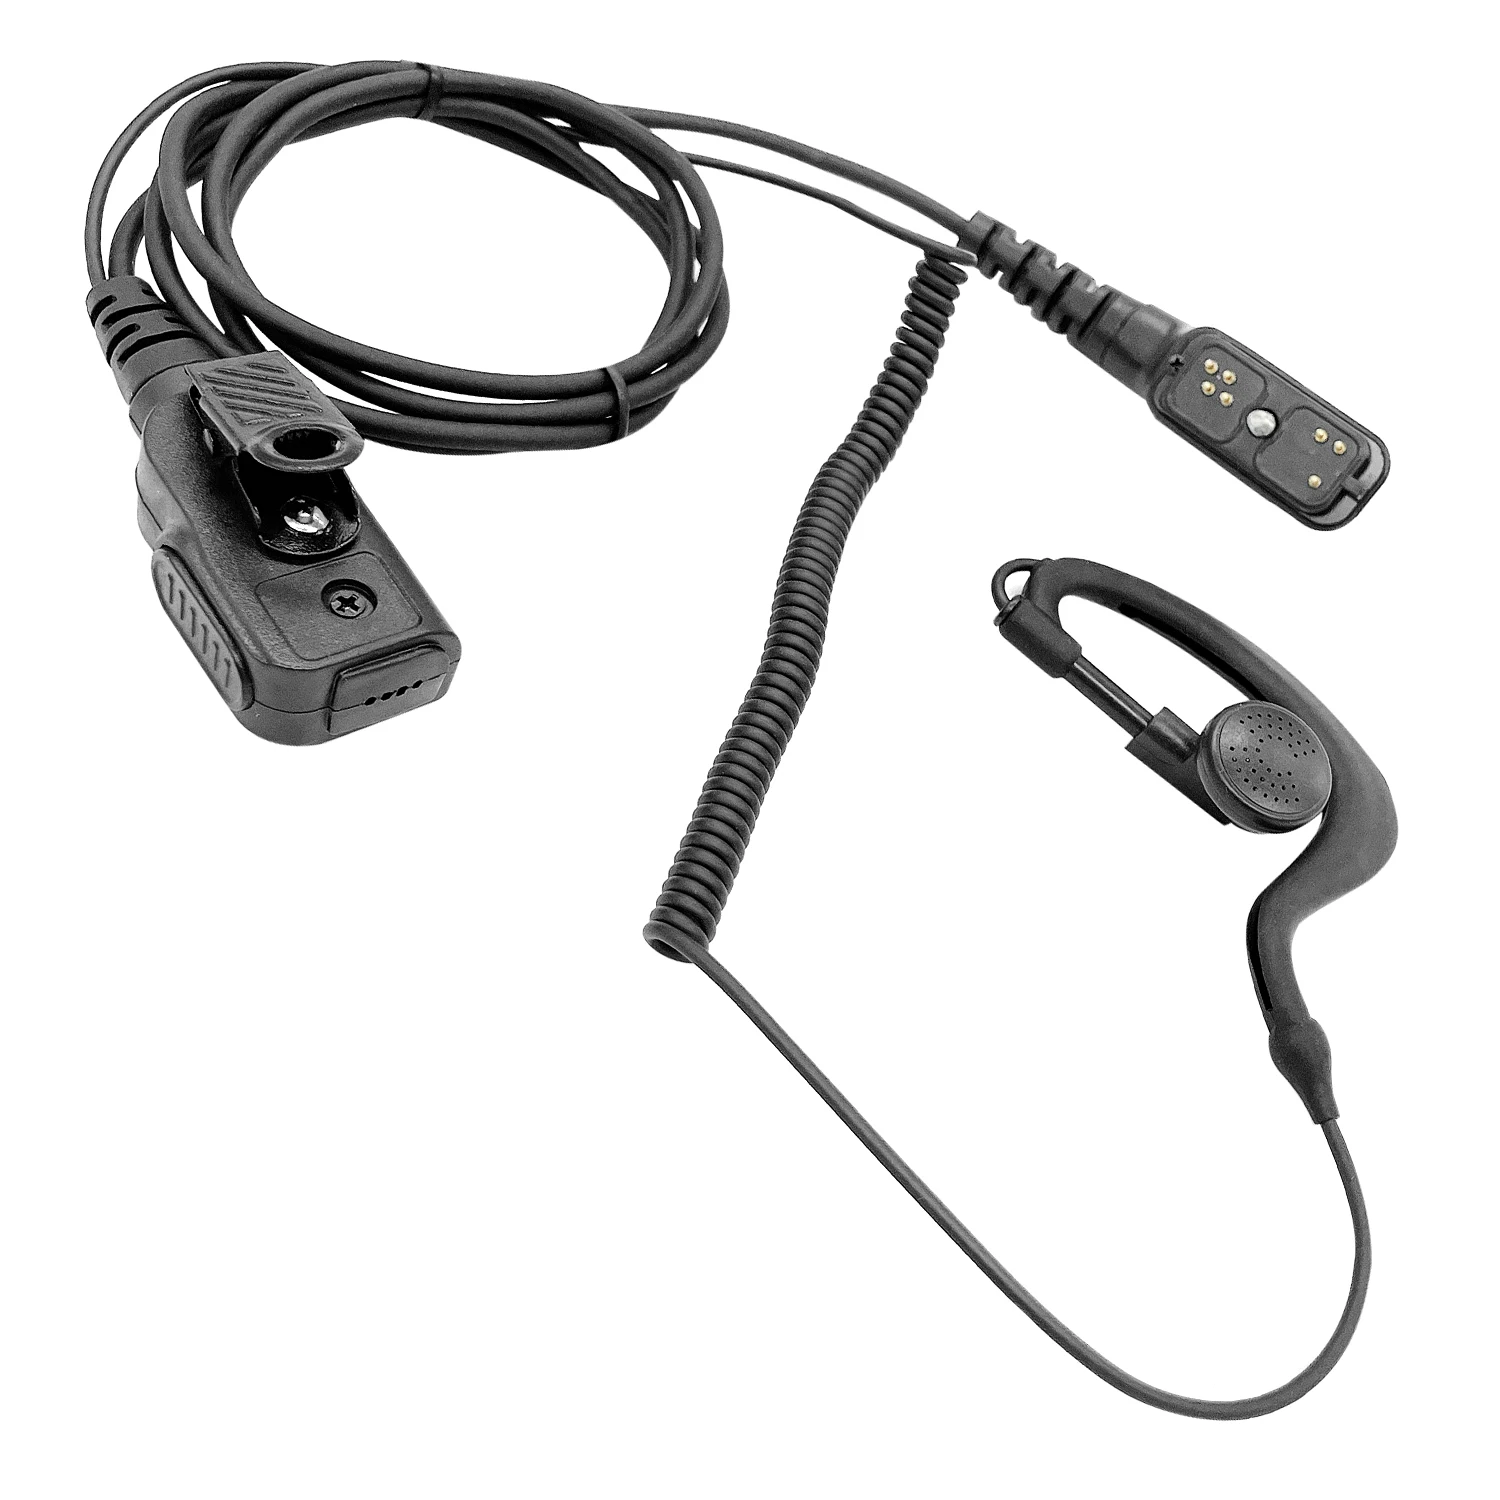 Type G headphones  walkie talkie Earpiece for  Hytera PD785G, PD788, PD790Ex, PD792Ex, PD982, UL913, PT-580  two way radio